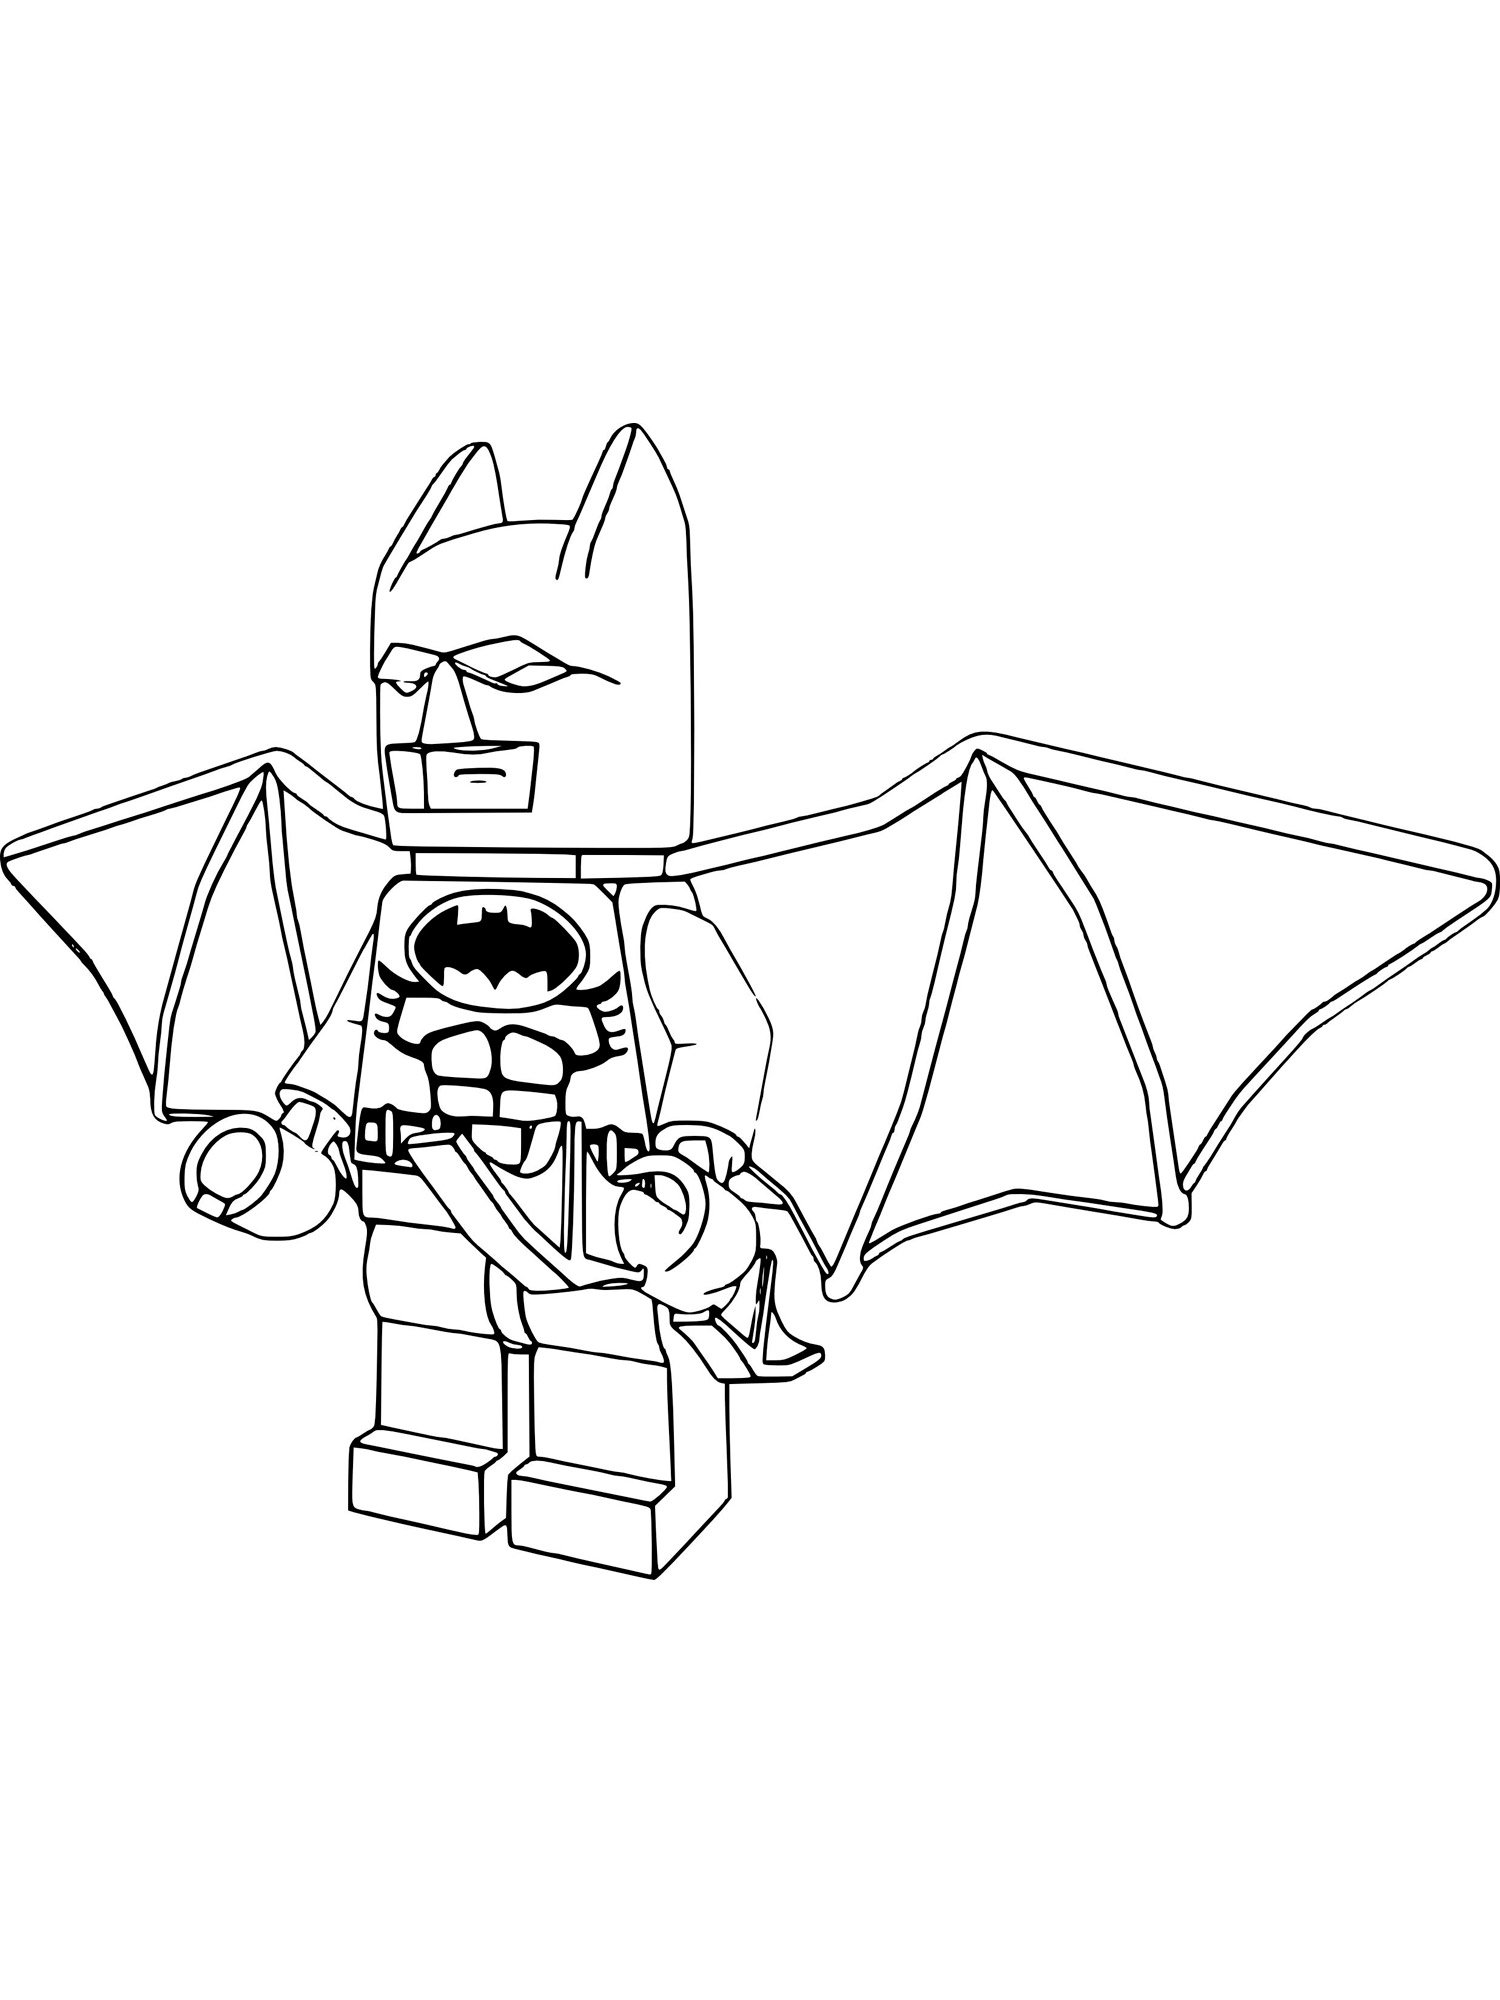 Lego Batman Coloring Pages. Free Printable Lego Batman Coloring ...